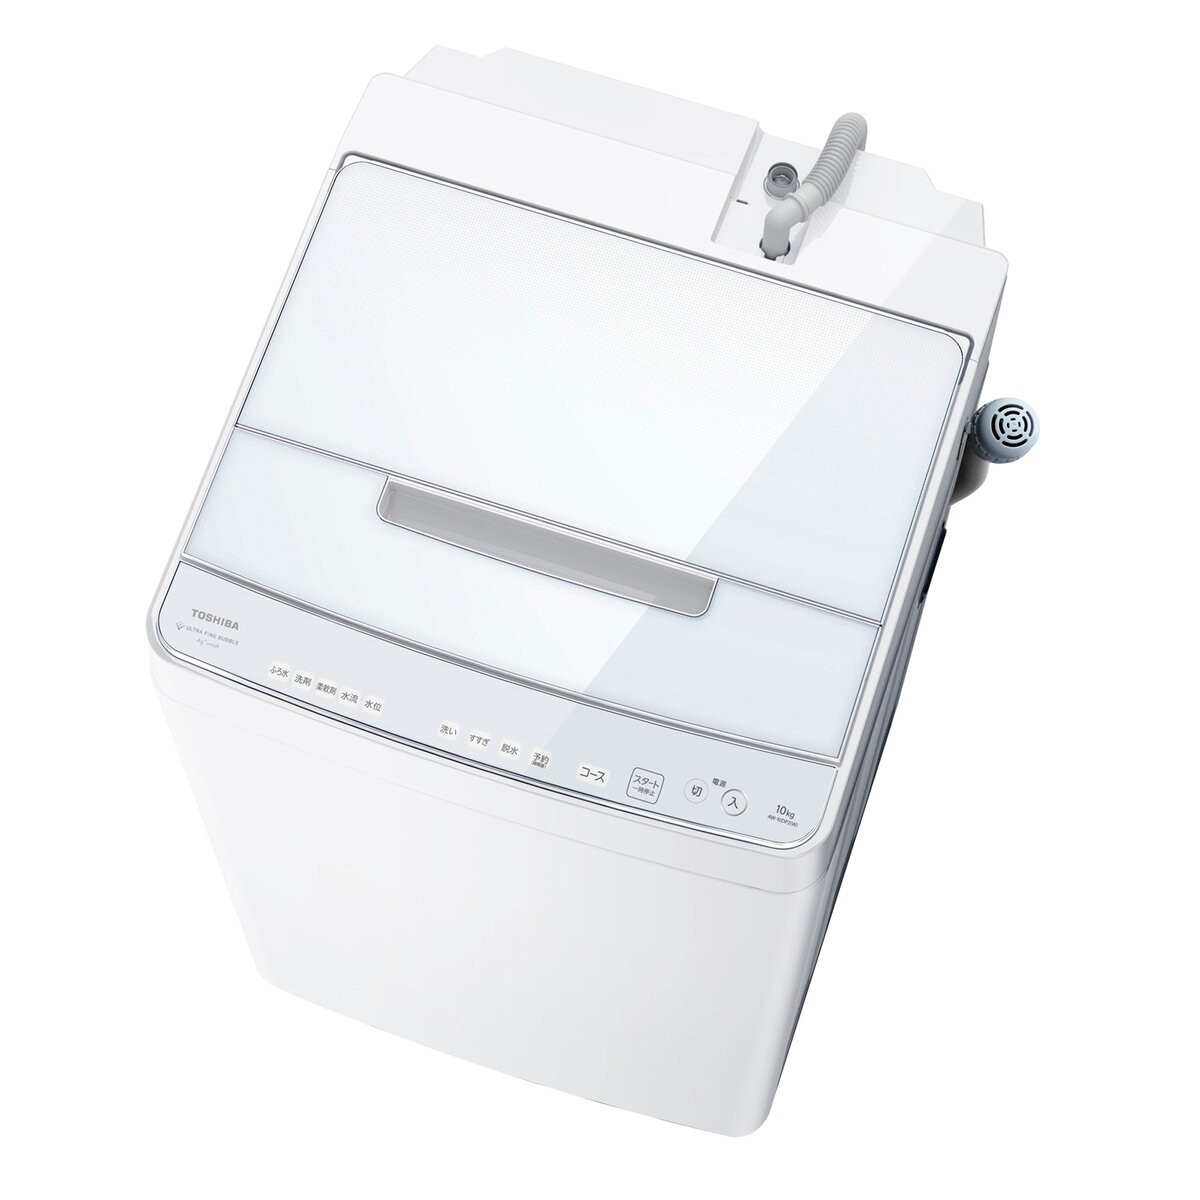 TOSHIBA 縦型洗濯機 ZABOON 12kg AW-12DP2 | Costco Japan